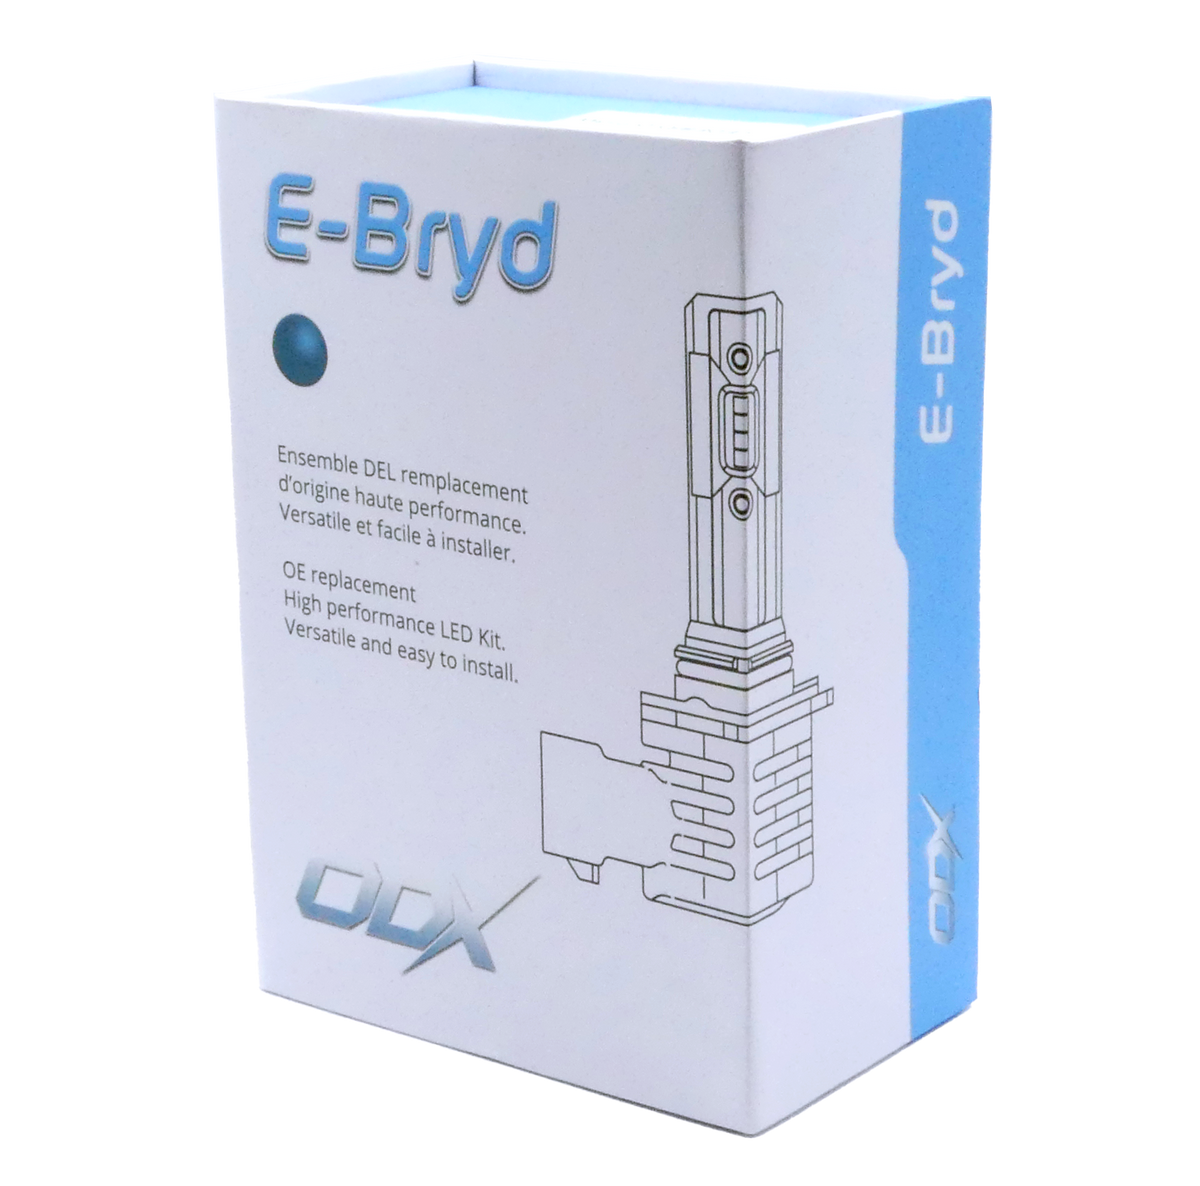 H8 E-BRYD LED BULB